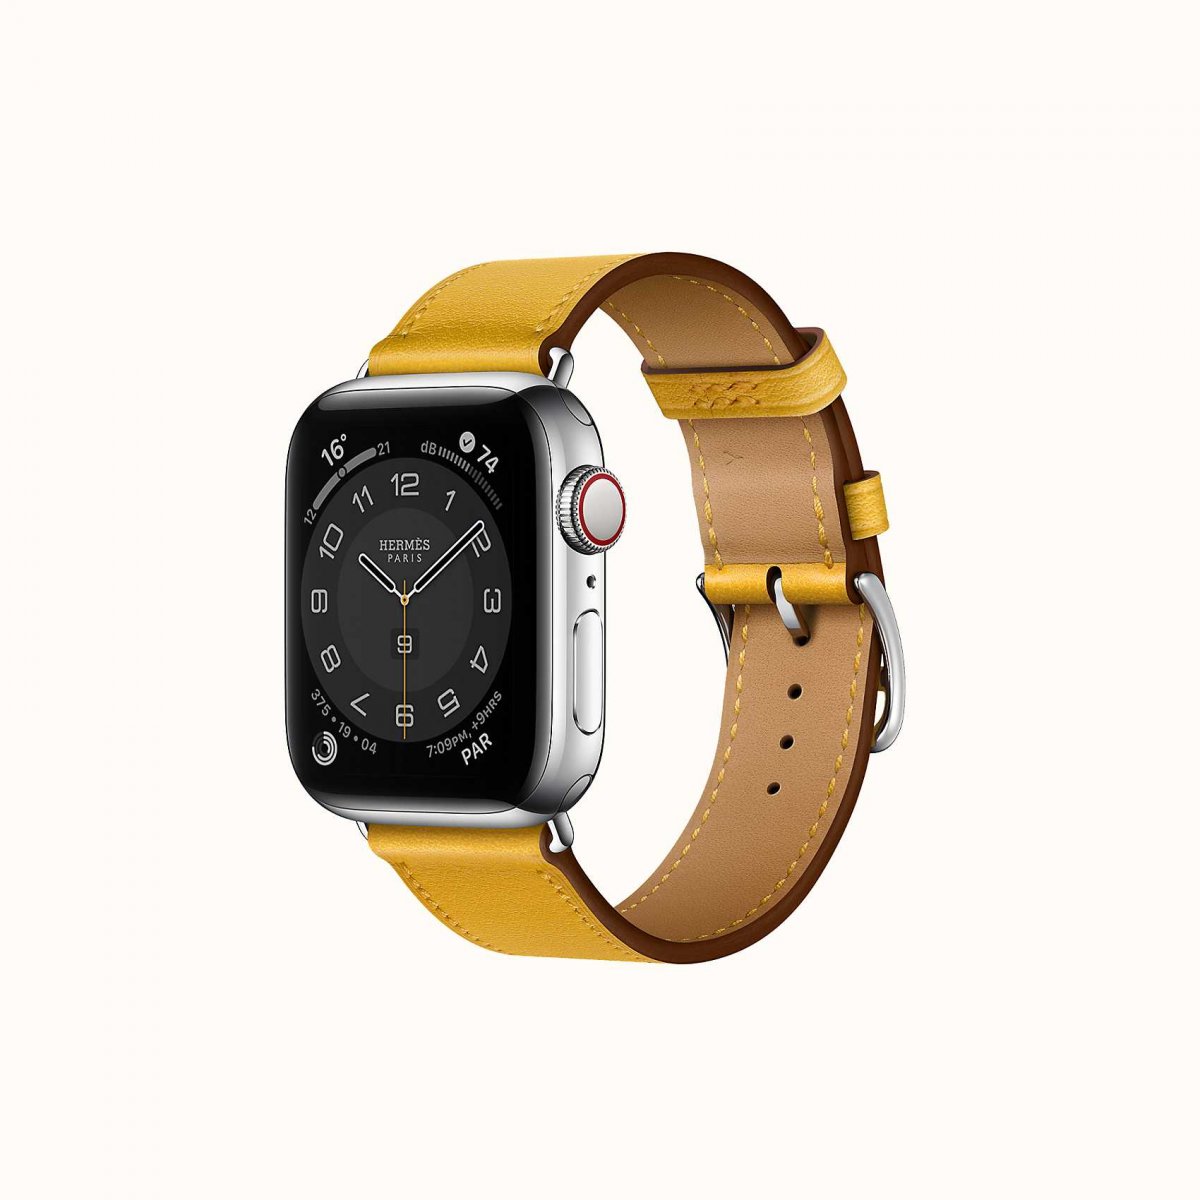 Řemínek iMore Single Tour Apple Watch Series 3/2/1 (42mm) - Žlutý